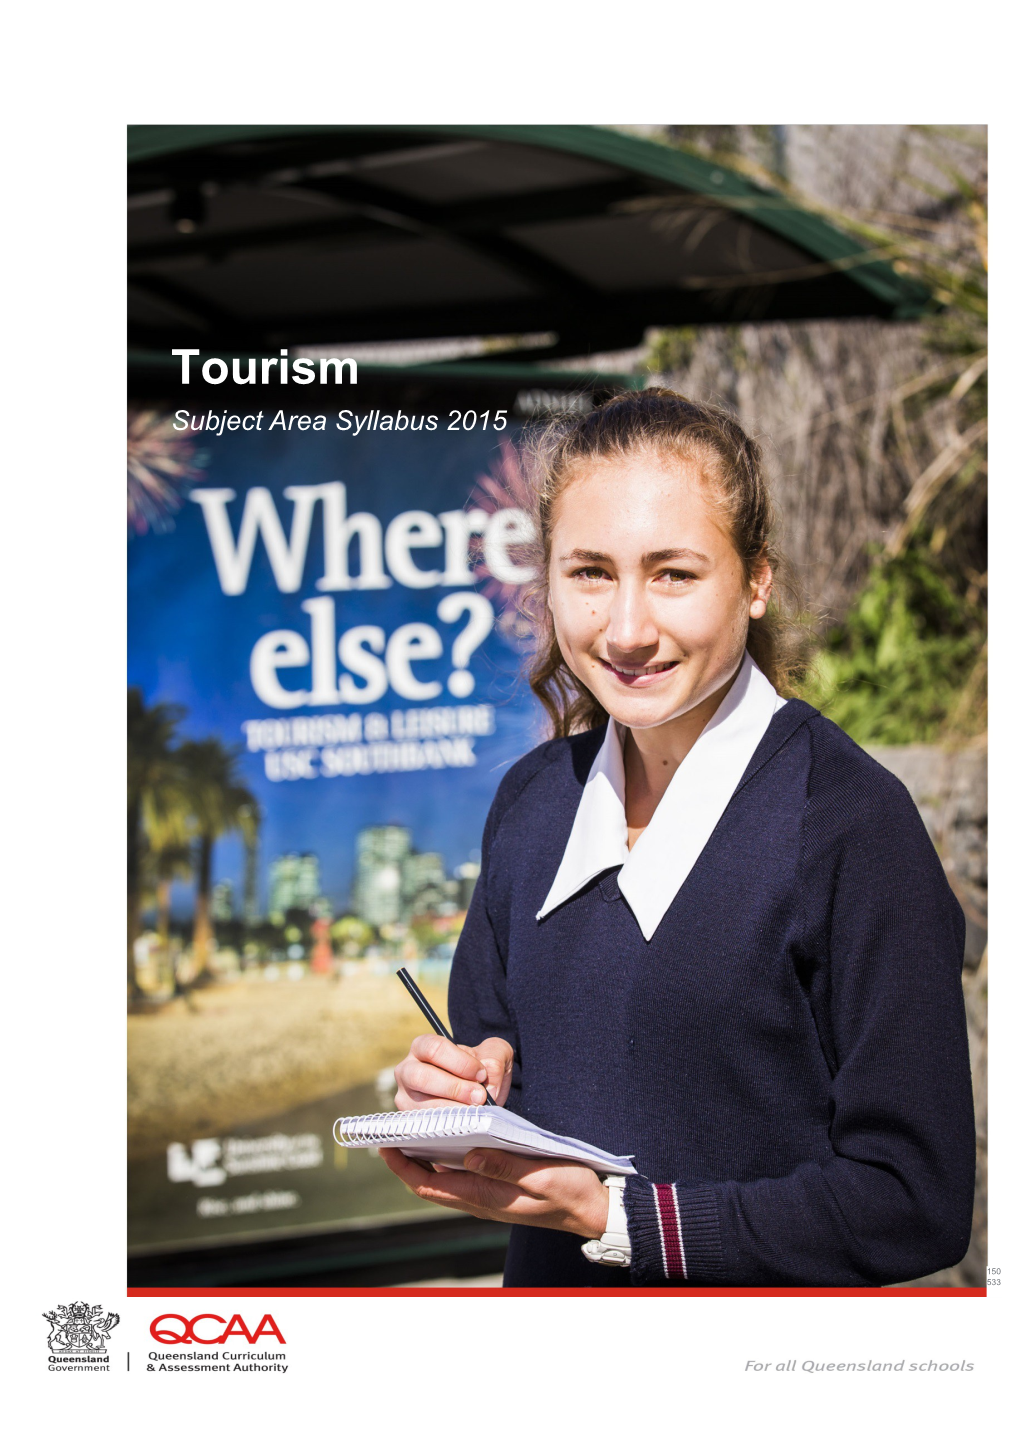 Subject Area Syllabus (2015) Tourism